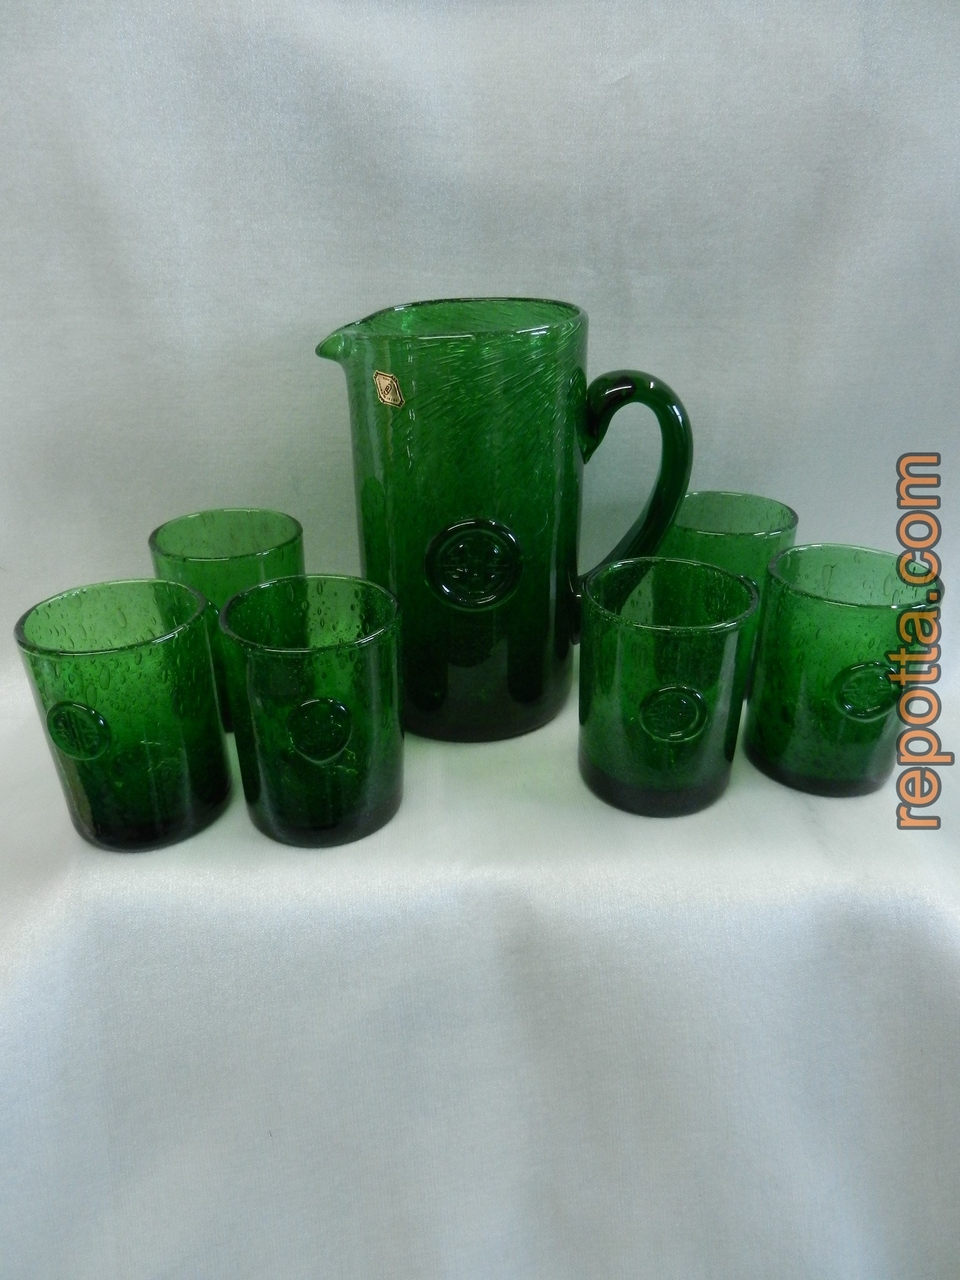 empoli vetro verde glass set with carafe SOLD - repotta